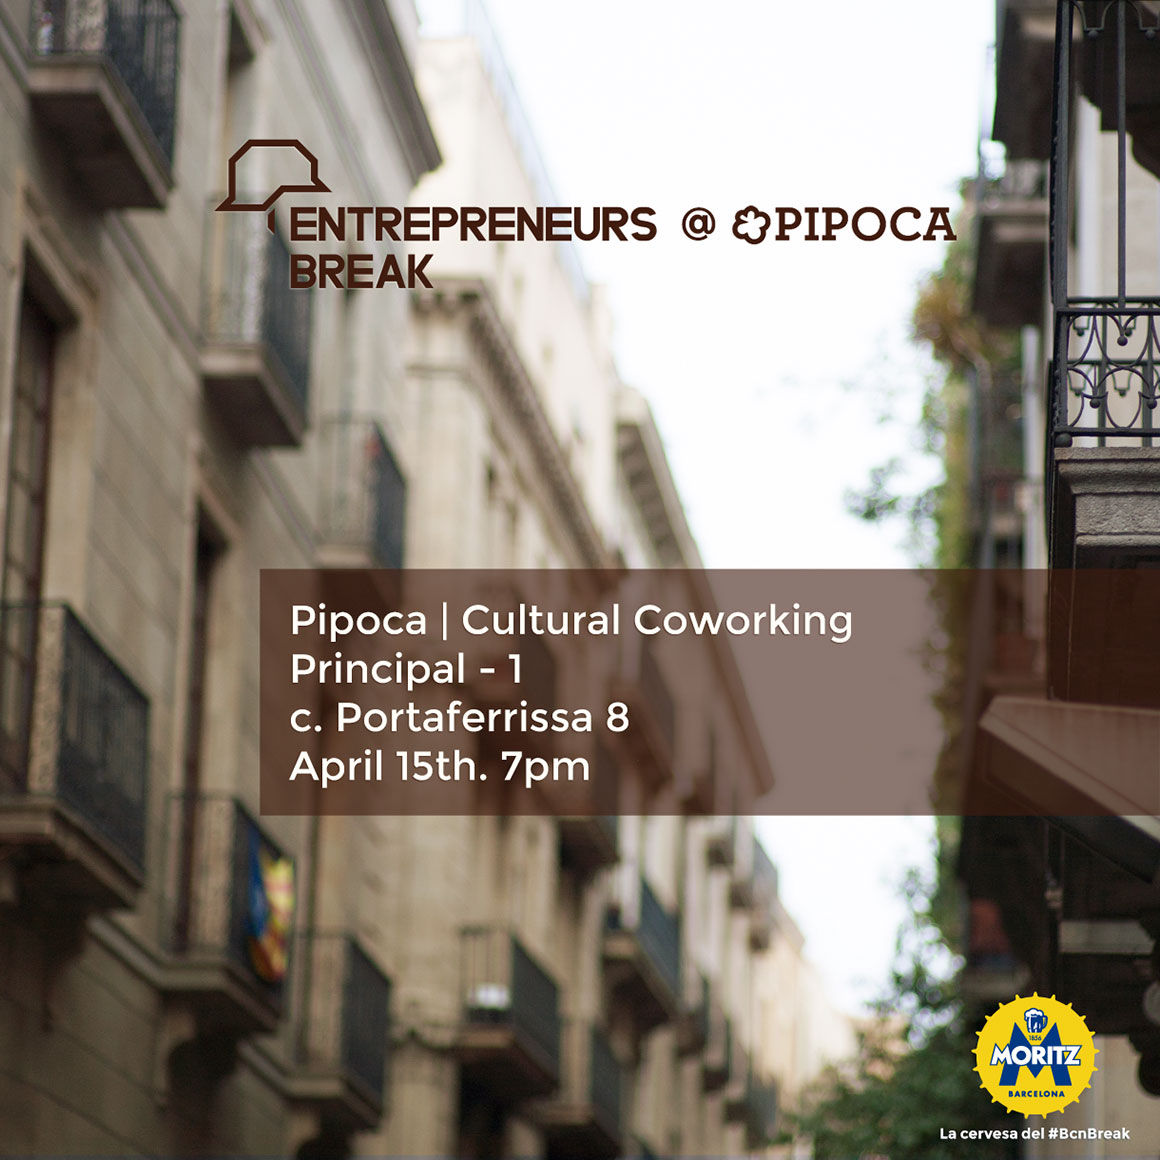 Entrepreneurs Break @Pipoca Barcinno